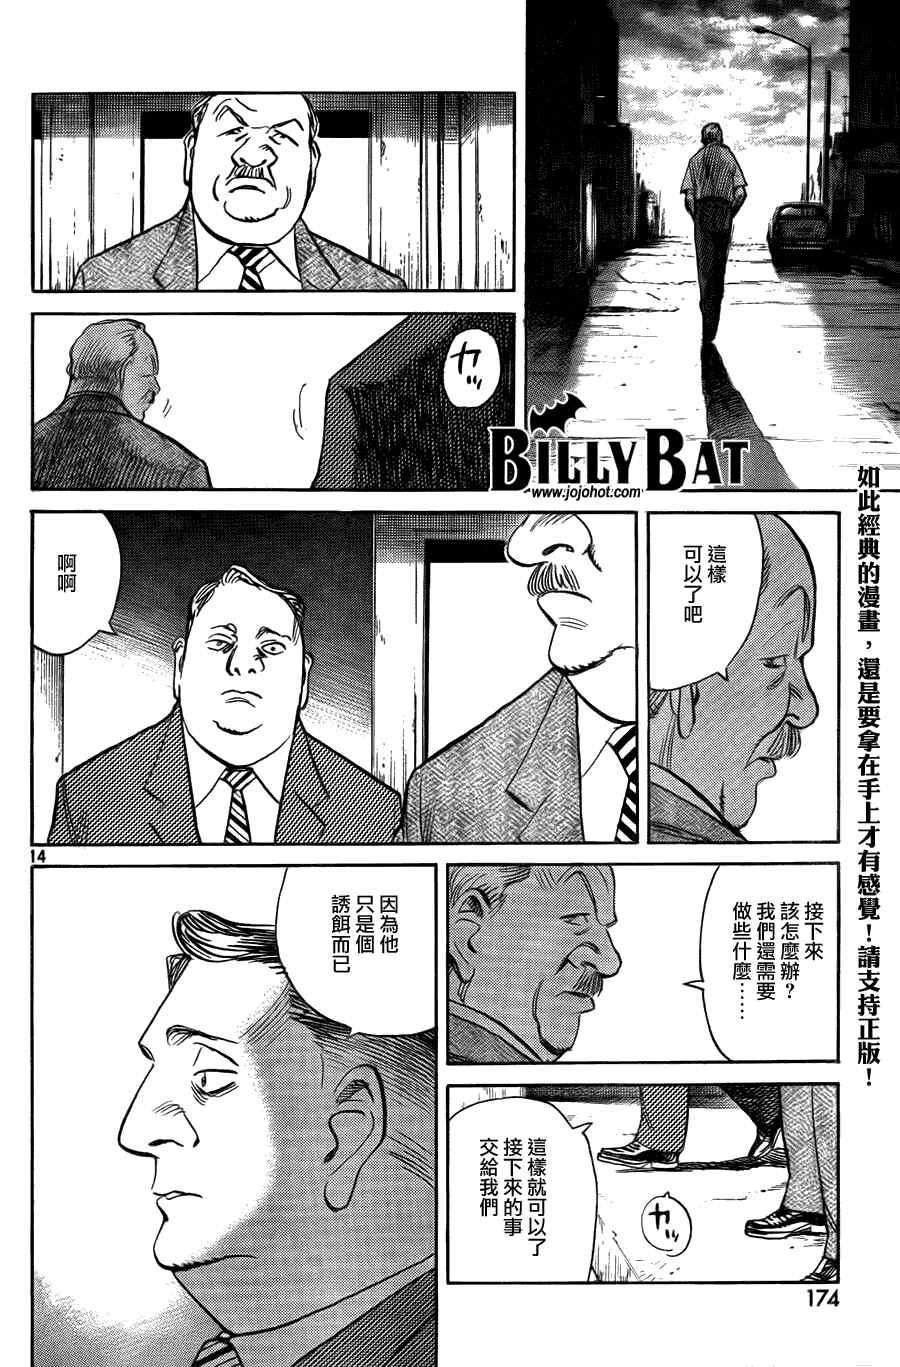 Billy_Bat - 第48話 - 4